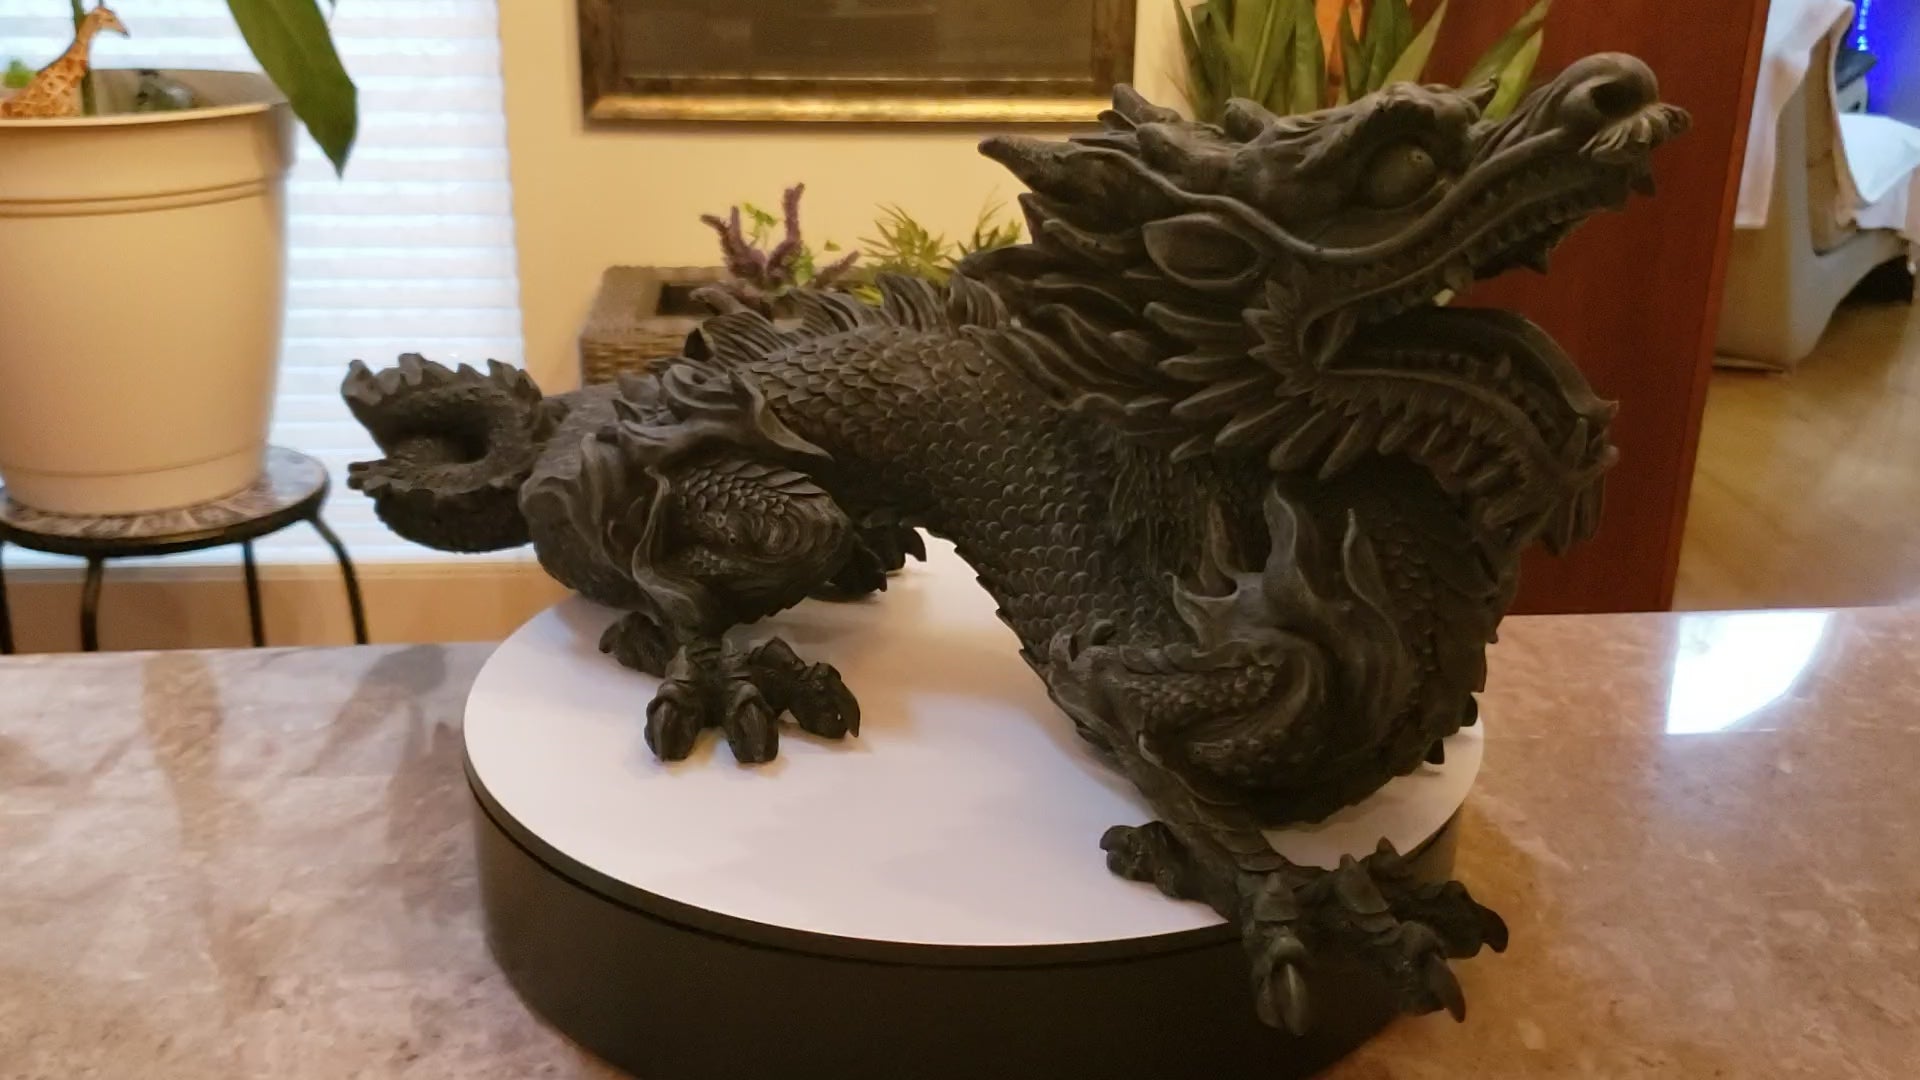 Auction for sale dragon statue